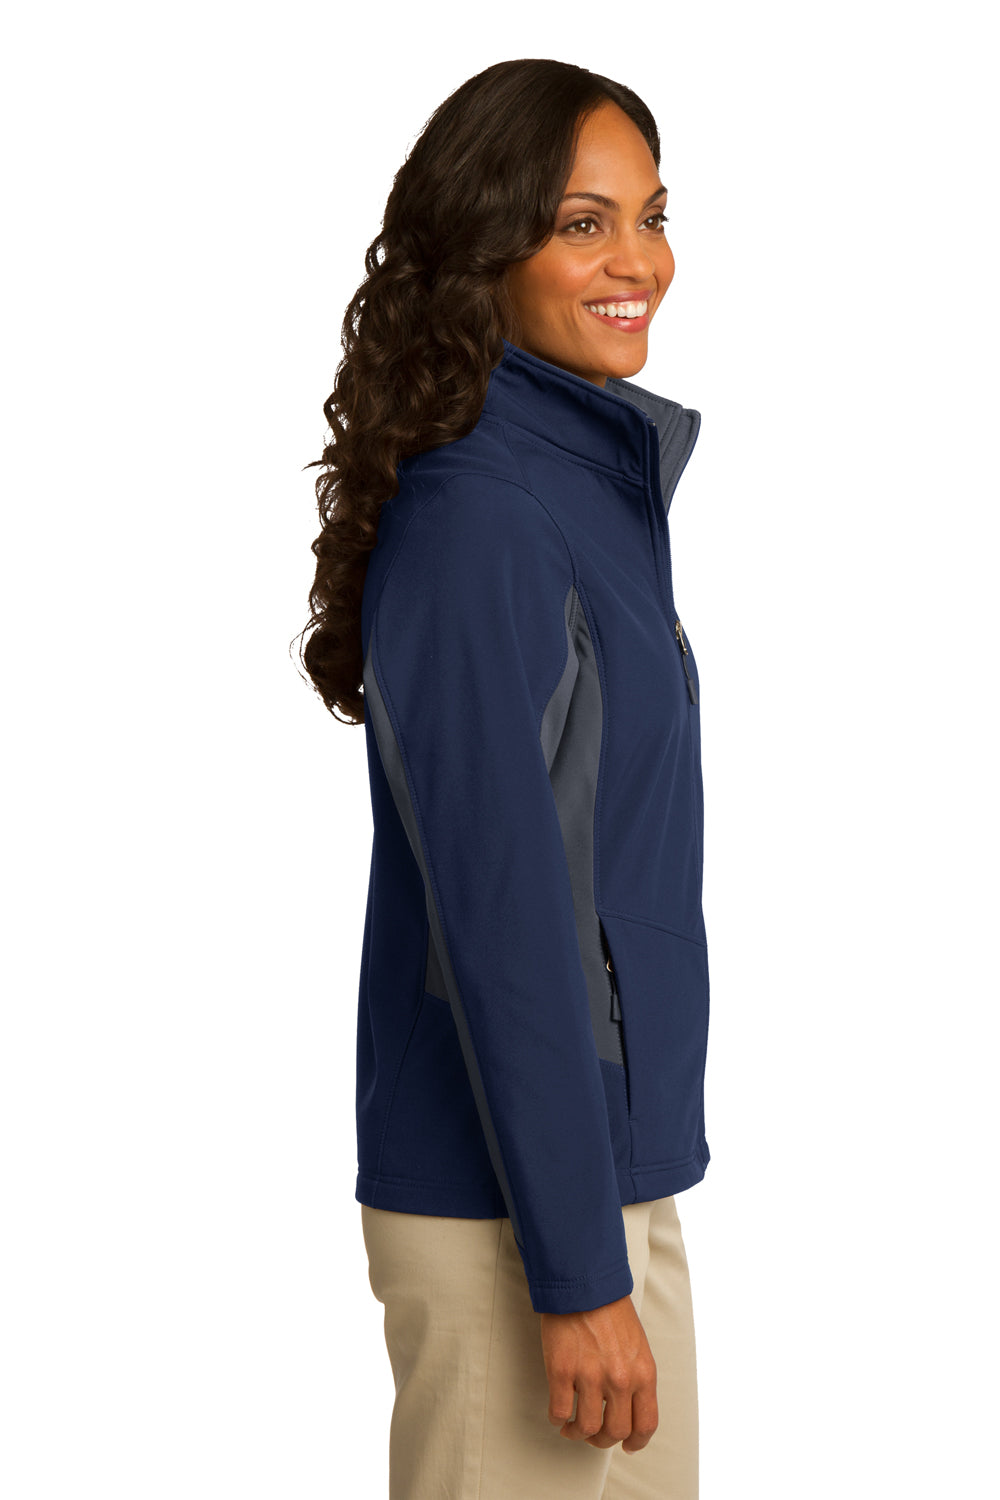 Port Authority L318 Womens Core Wind & Water Resistant Full Zip Jacket Navy Blue/Grey Side